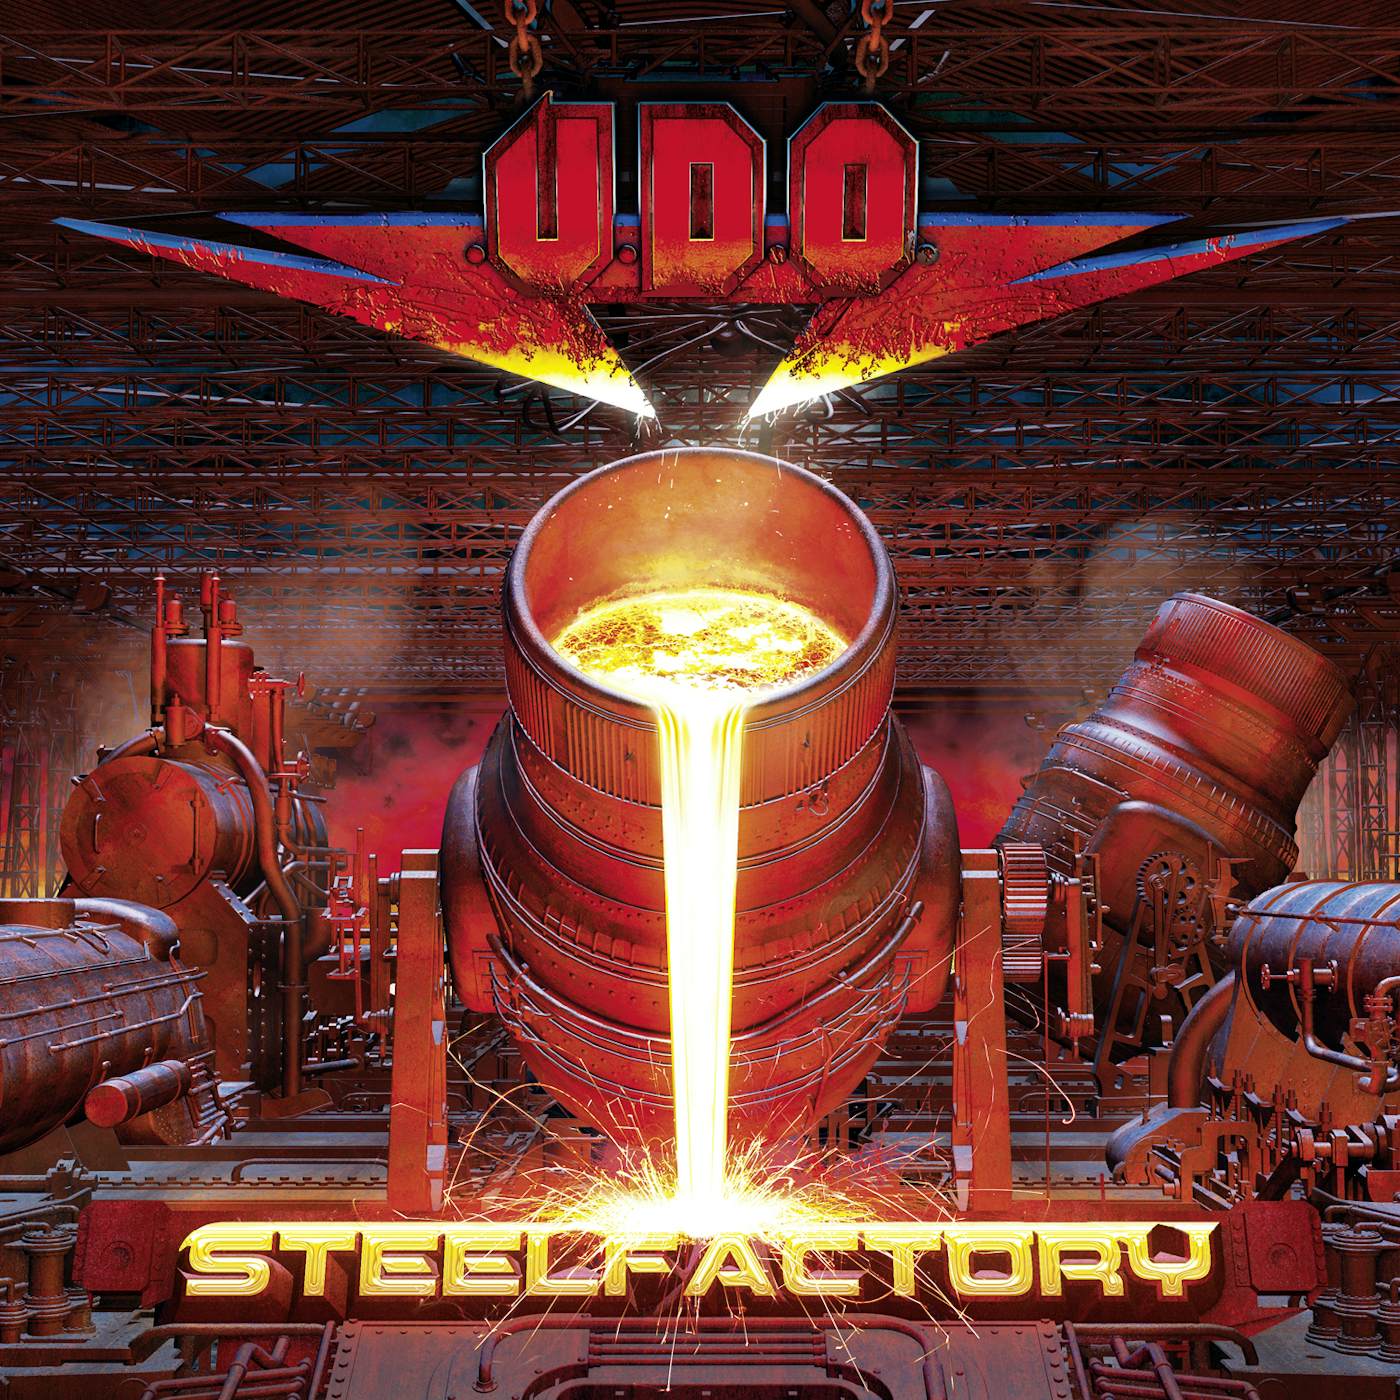 U.D.O. STEELFACTORY CD